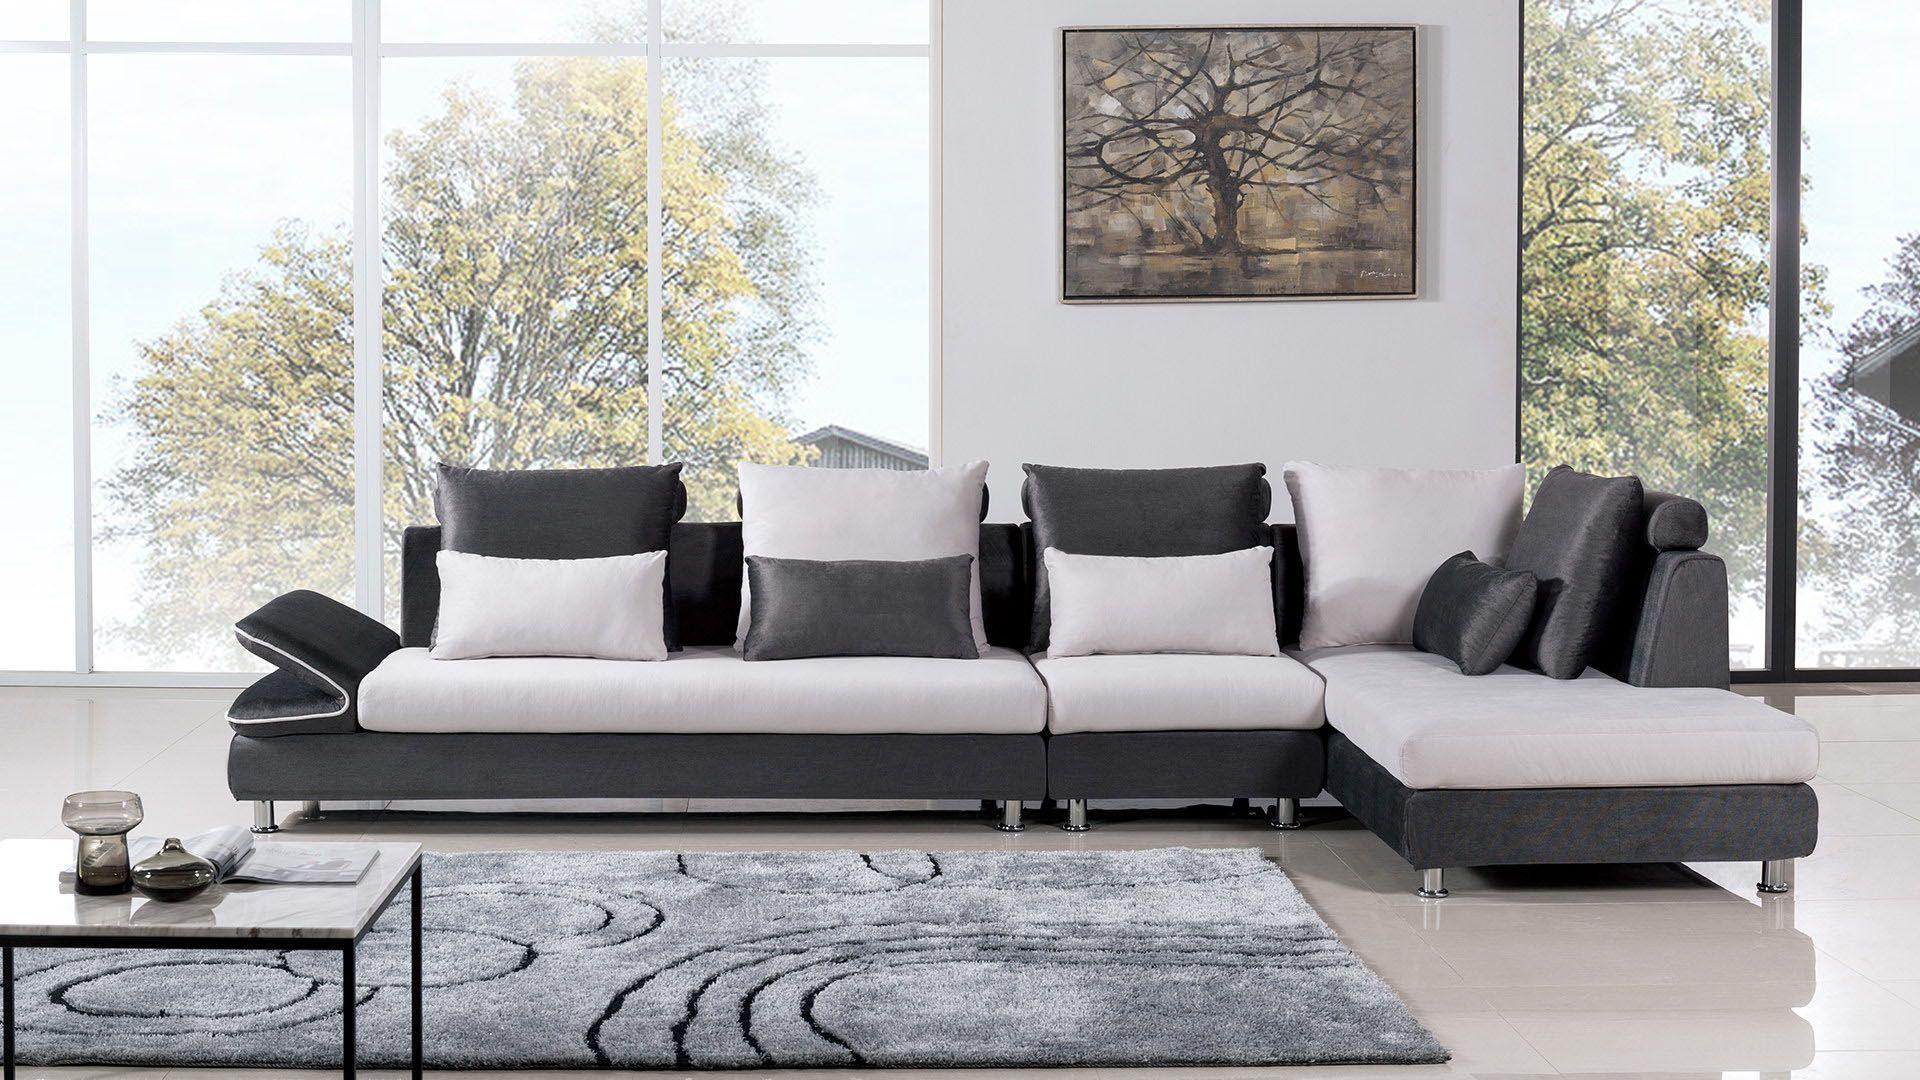 Contemporary, Modern Sectional Sofa AE-L341 AE-L341L in Cream, Gray Fabric